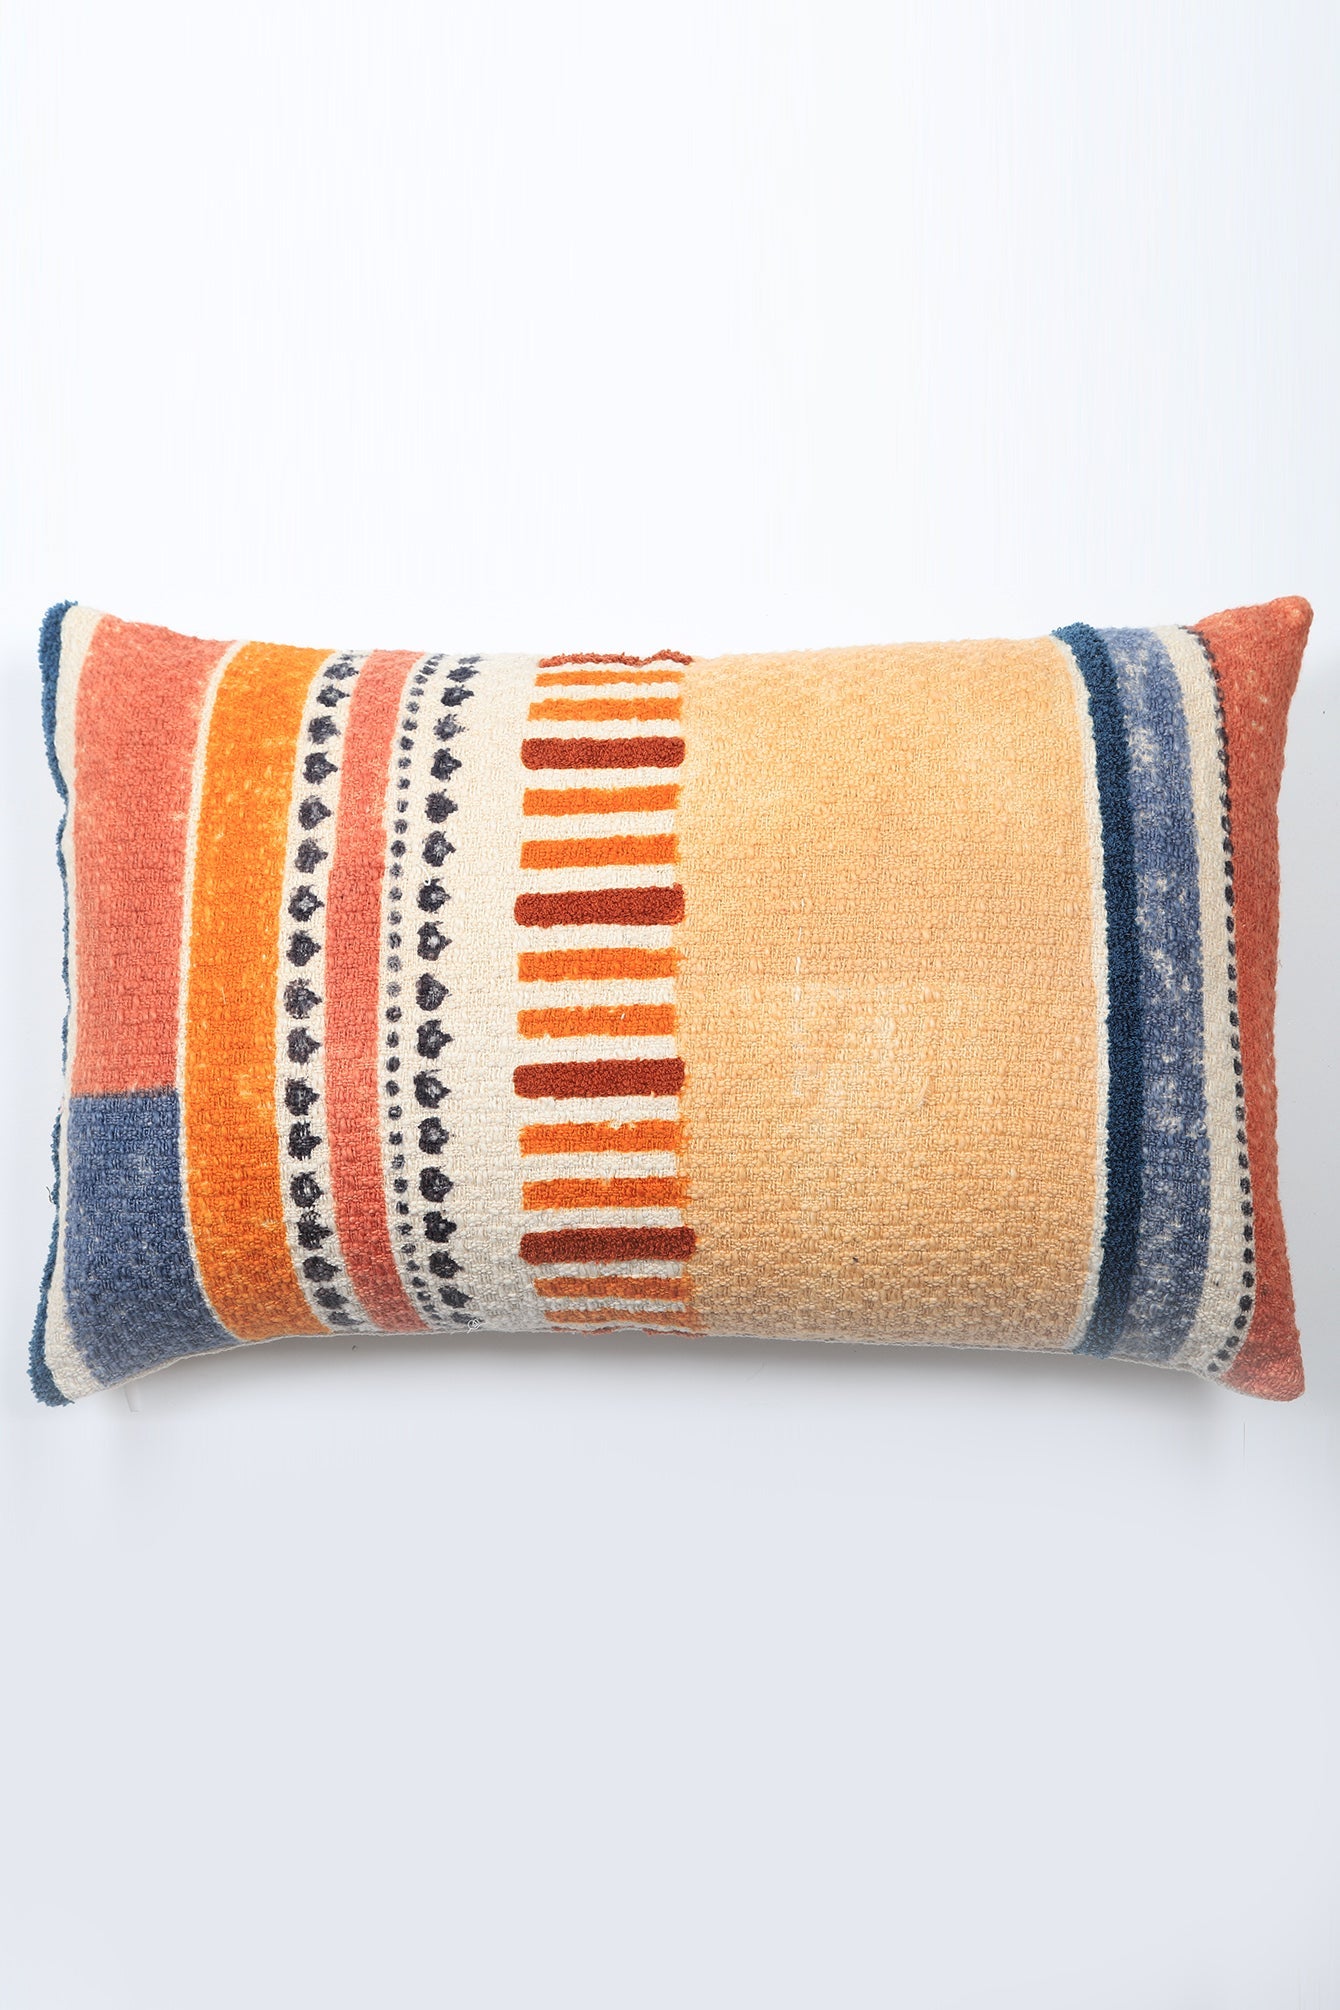 Laktasi Embroidery Over Block Printed Cushion Cover